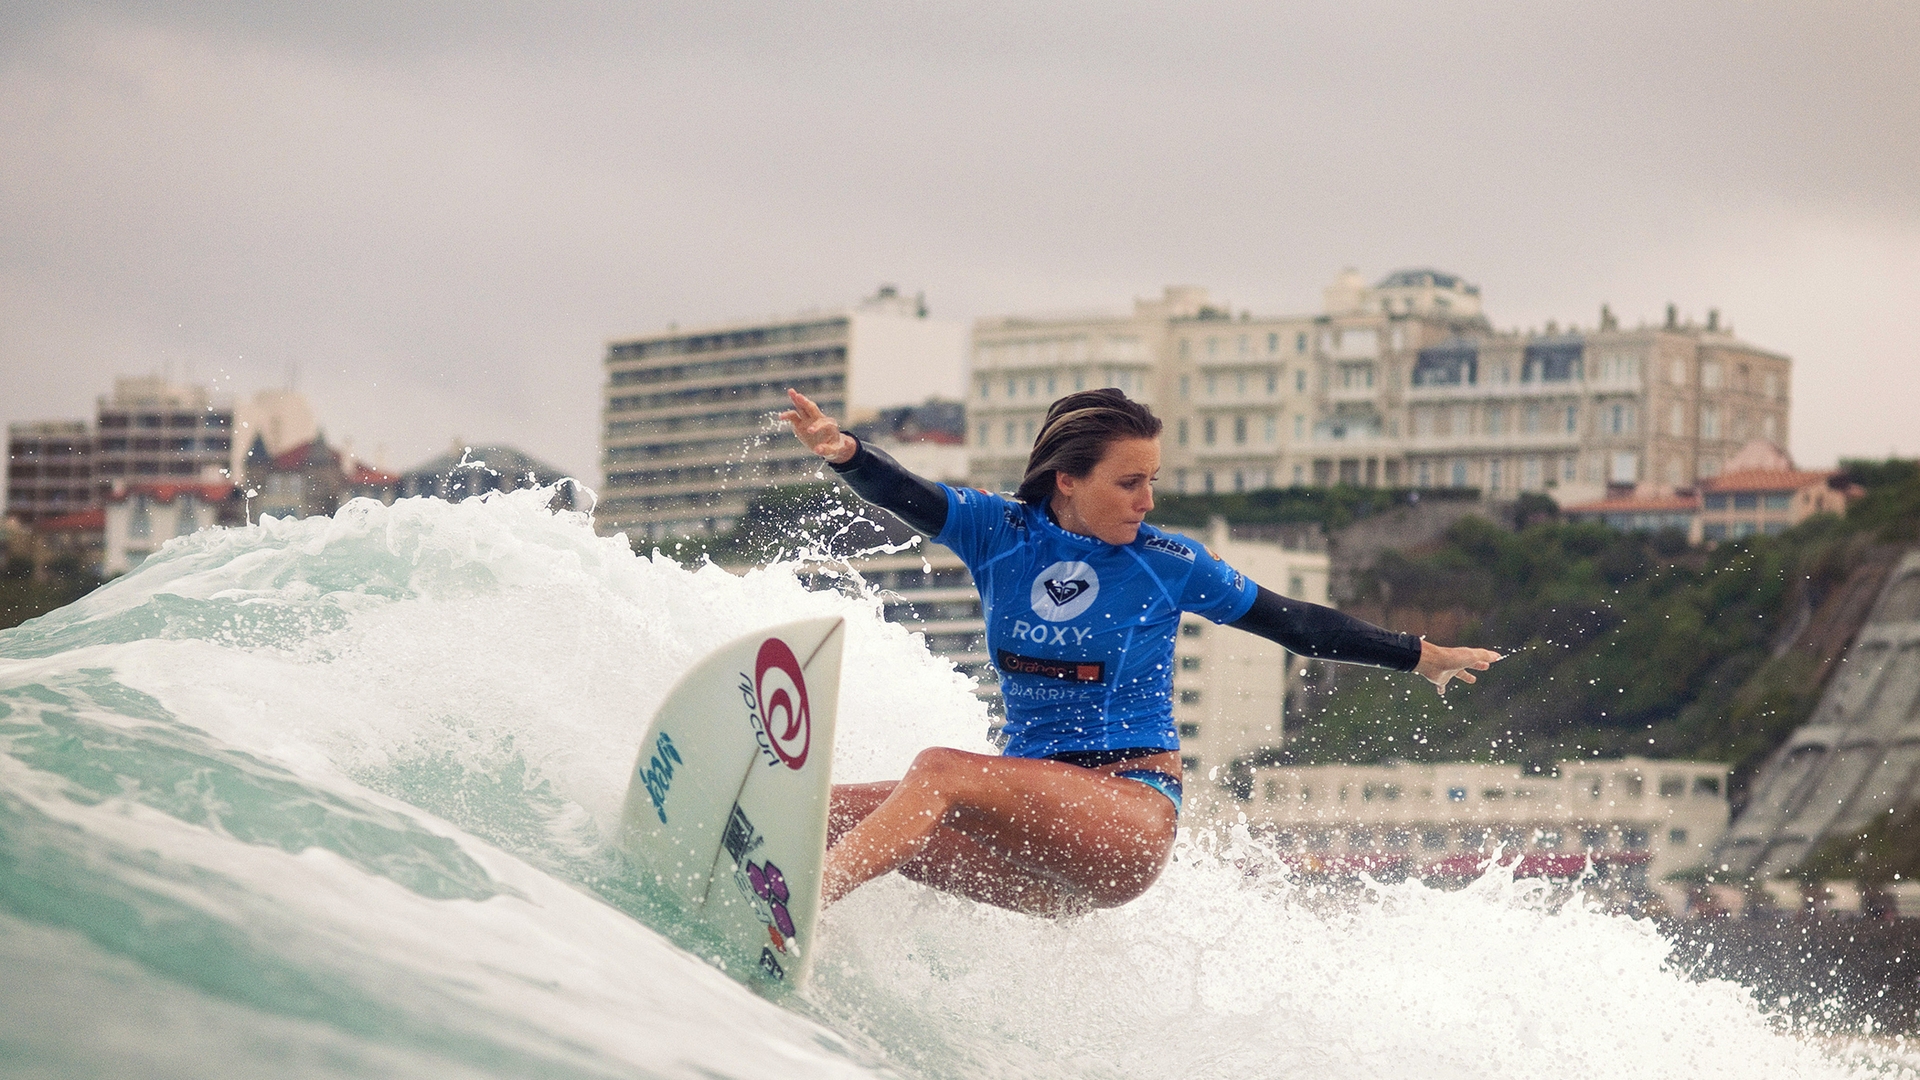 Alana Blanchard Surfing for 1920 x 1080 HDTV 1080p resolution